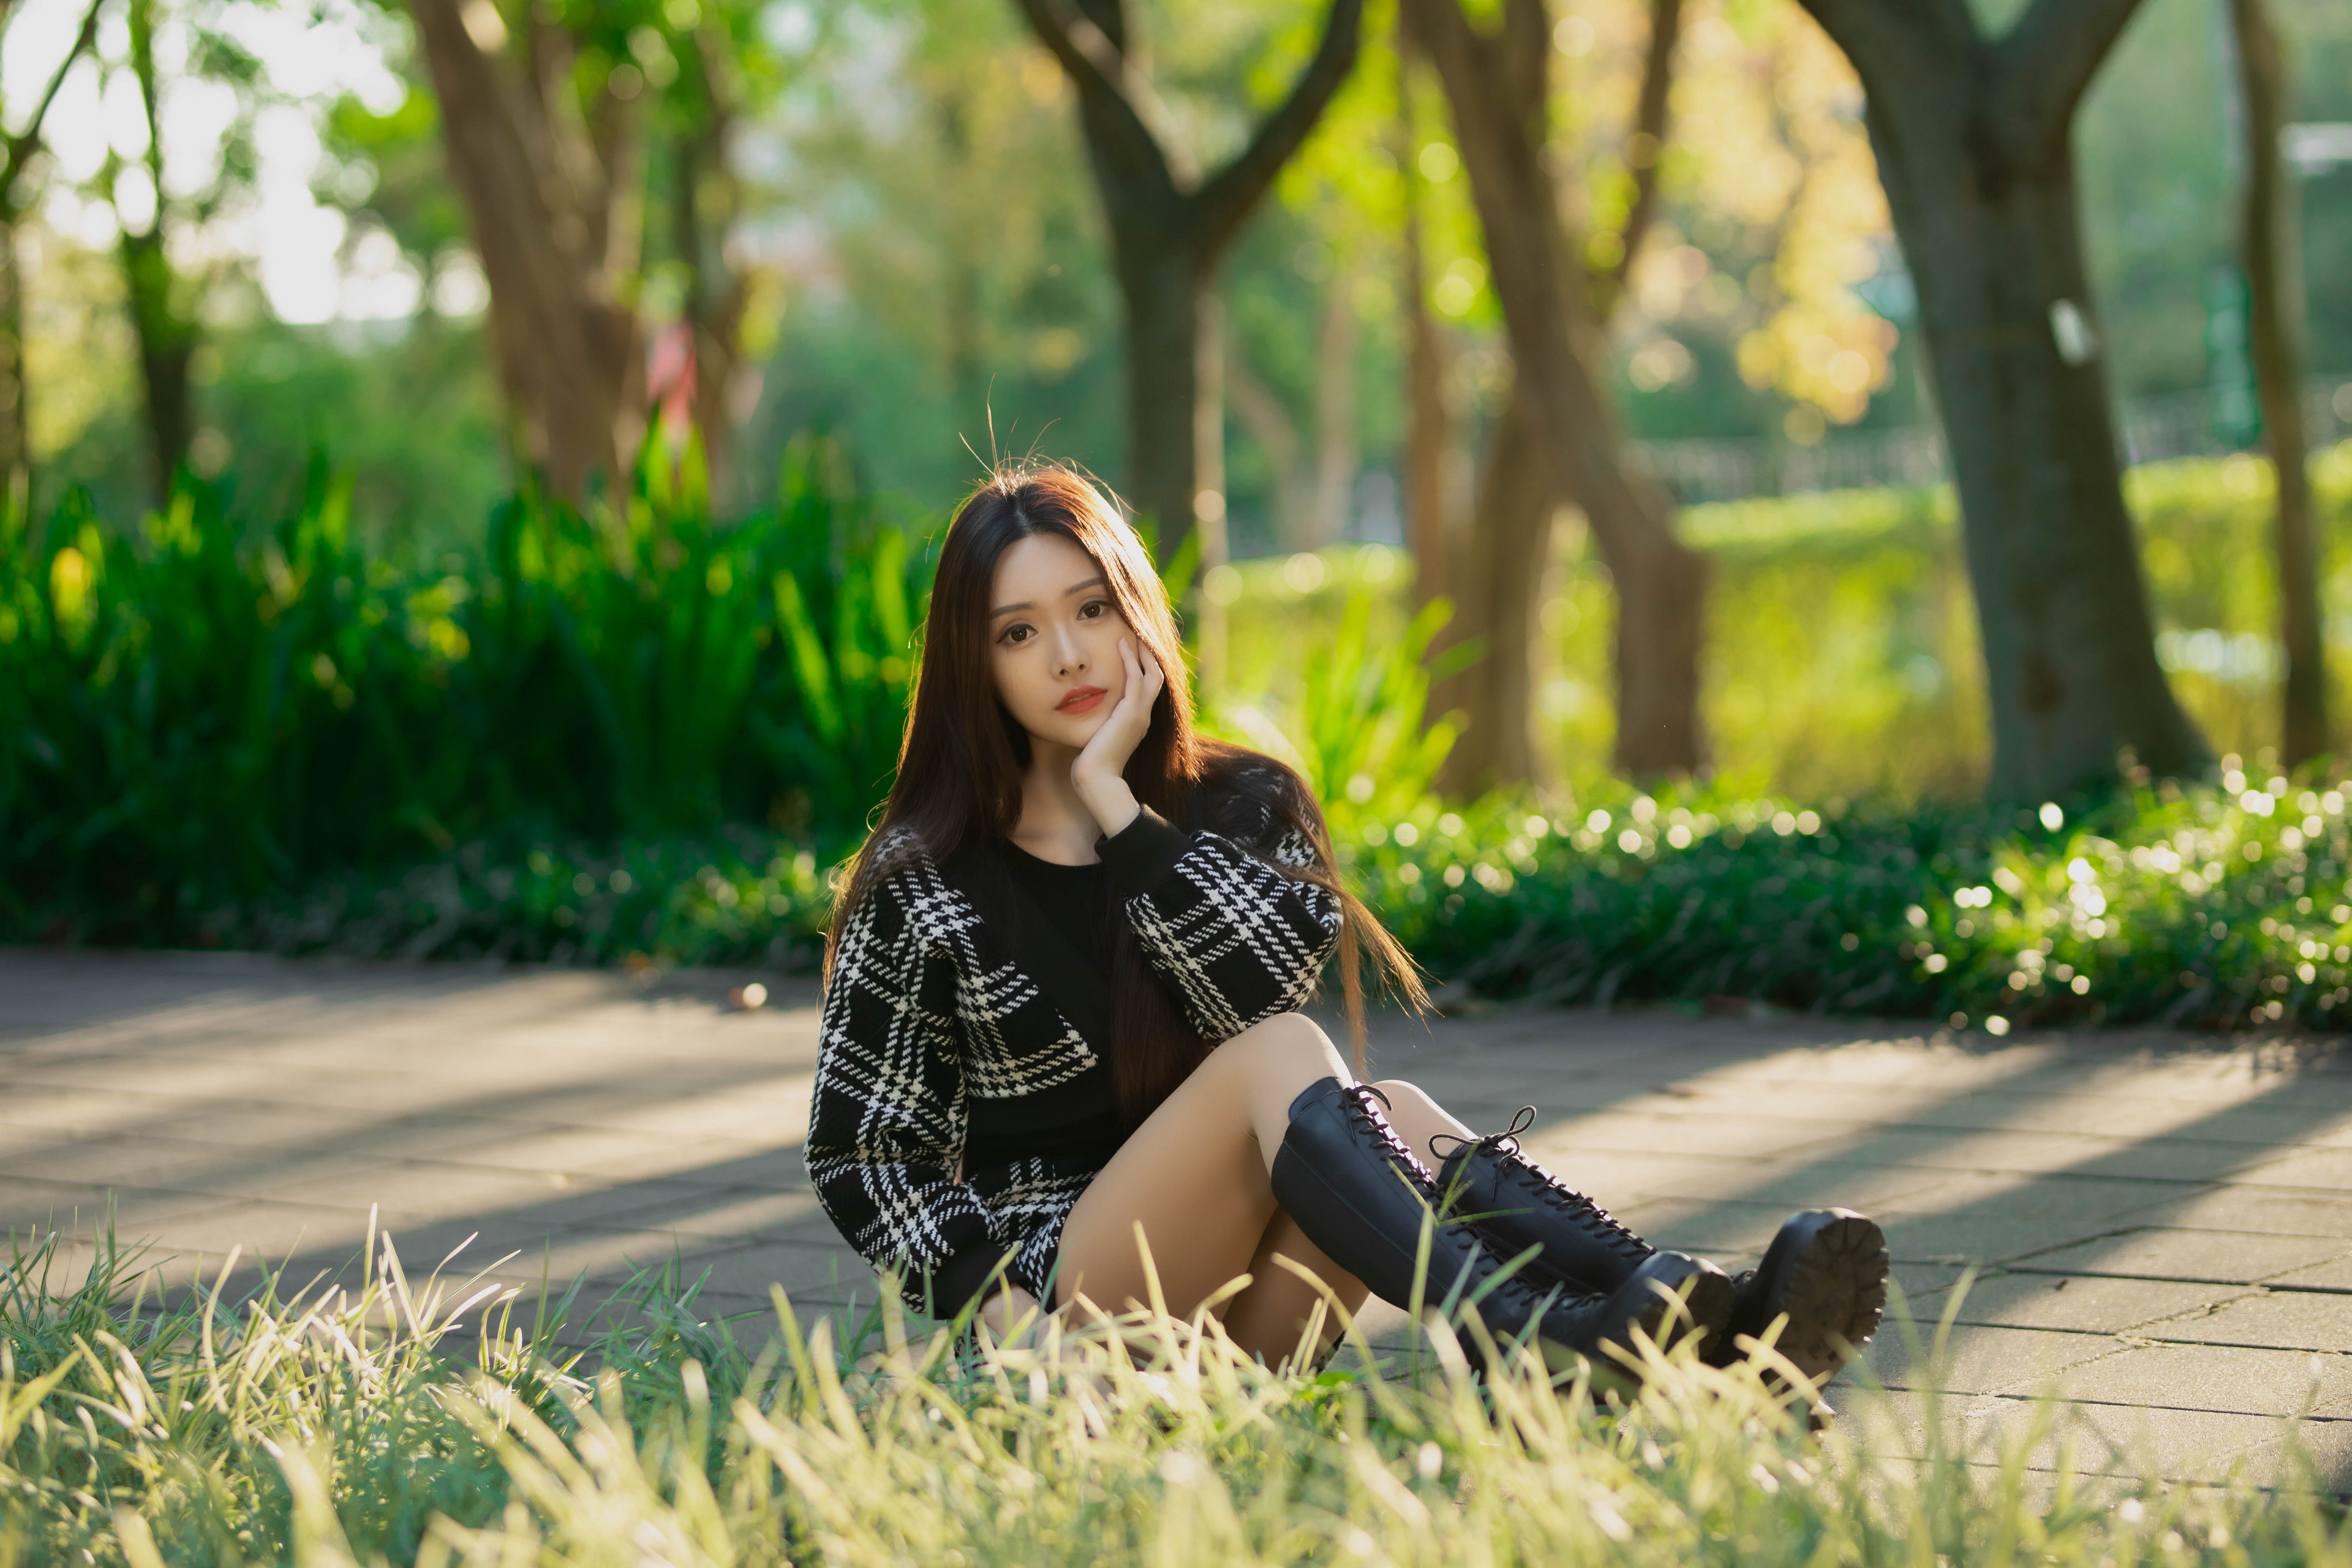 Asian Model Women Long Hair Dark Hair Depth Of Field Women Outdoors Sitting Trees Bushes Grass Boots 3840x2560